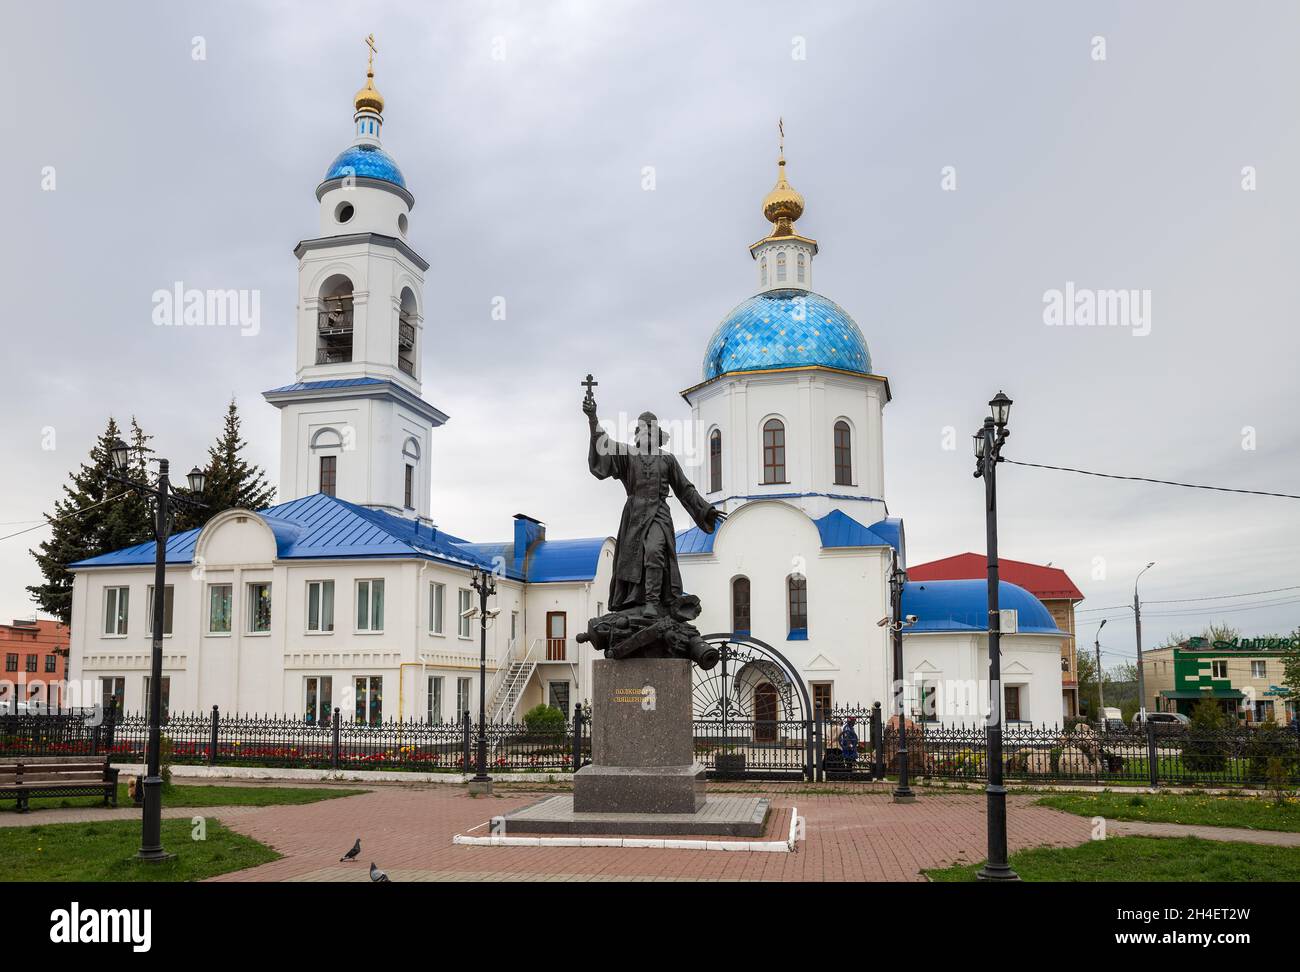 Maloyaroslavets, Kaluga region, Russia - May 13, 2021: Monument to Vasily Vasilkovsky hero of the Patriotic War of 1812, regimental priest awarded the Stock Photo